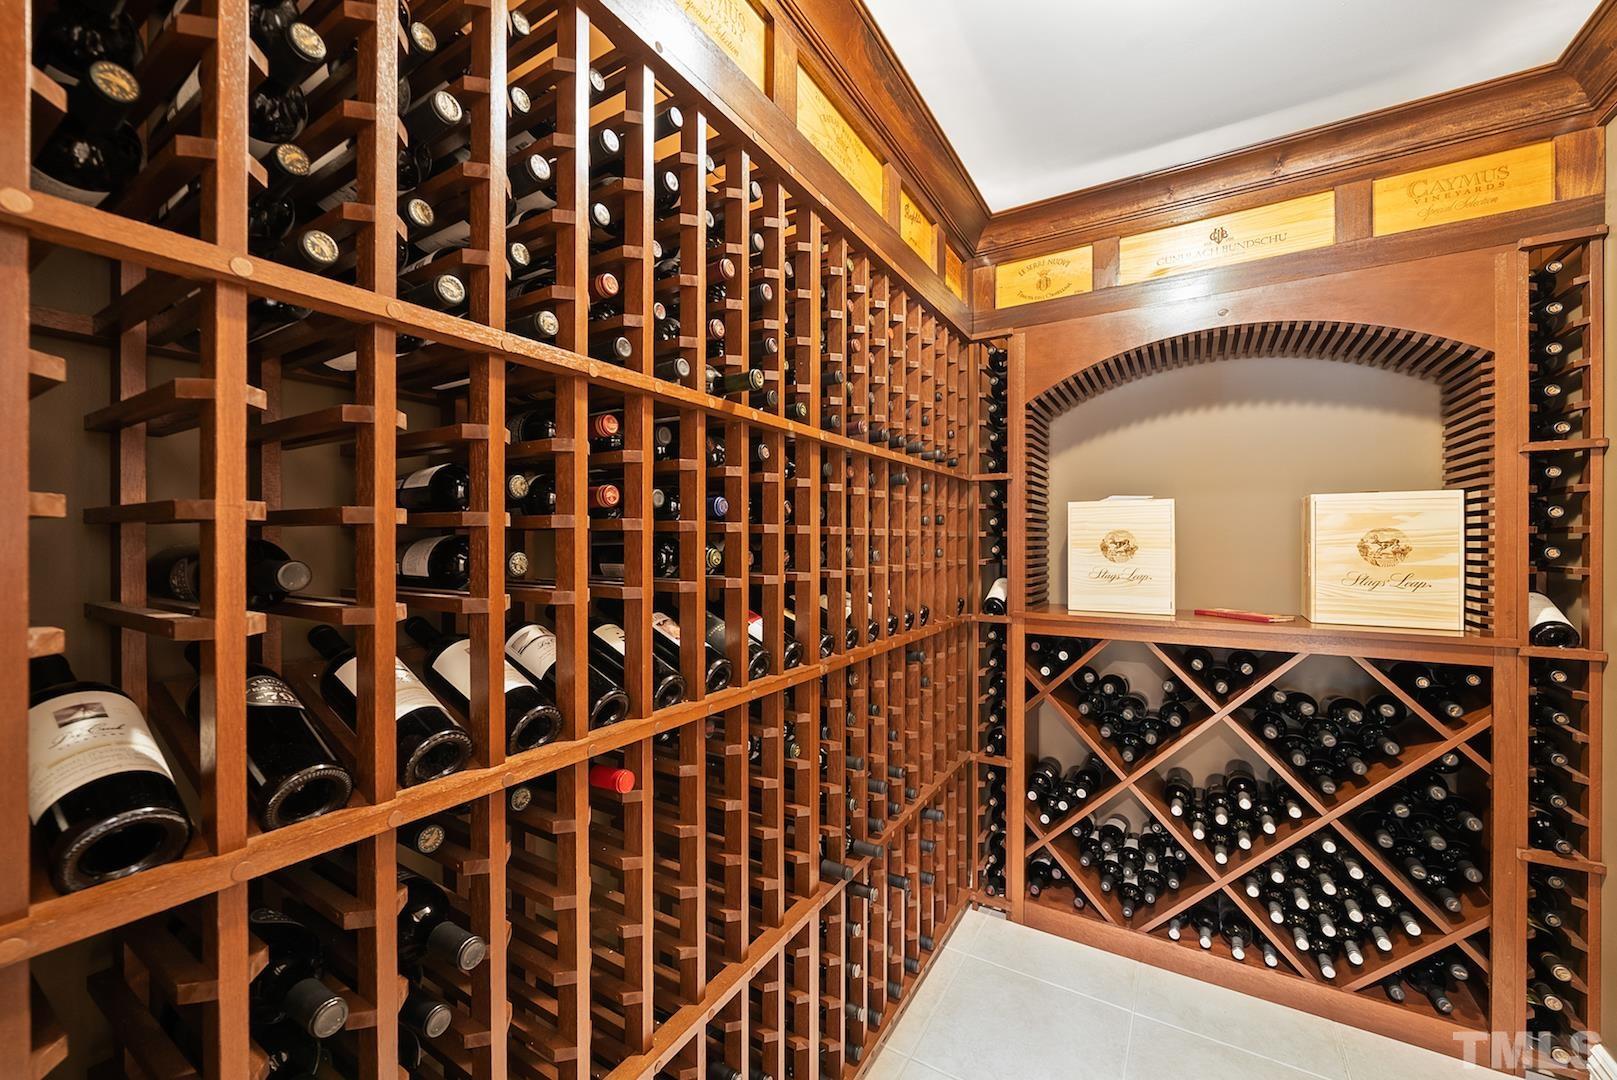 Basement Wine Cellar